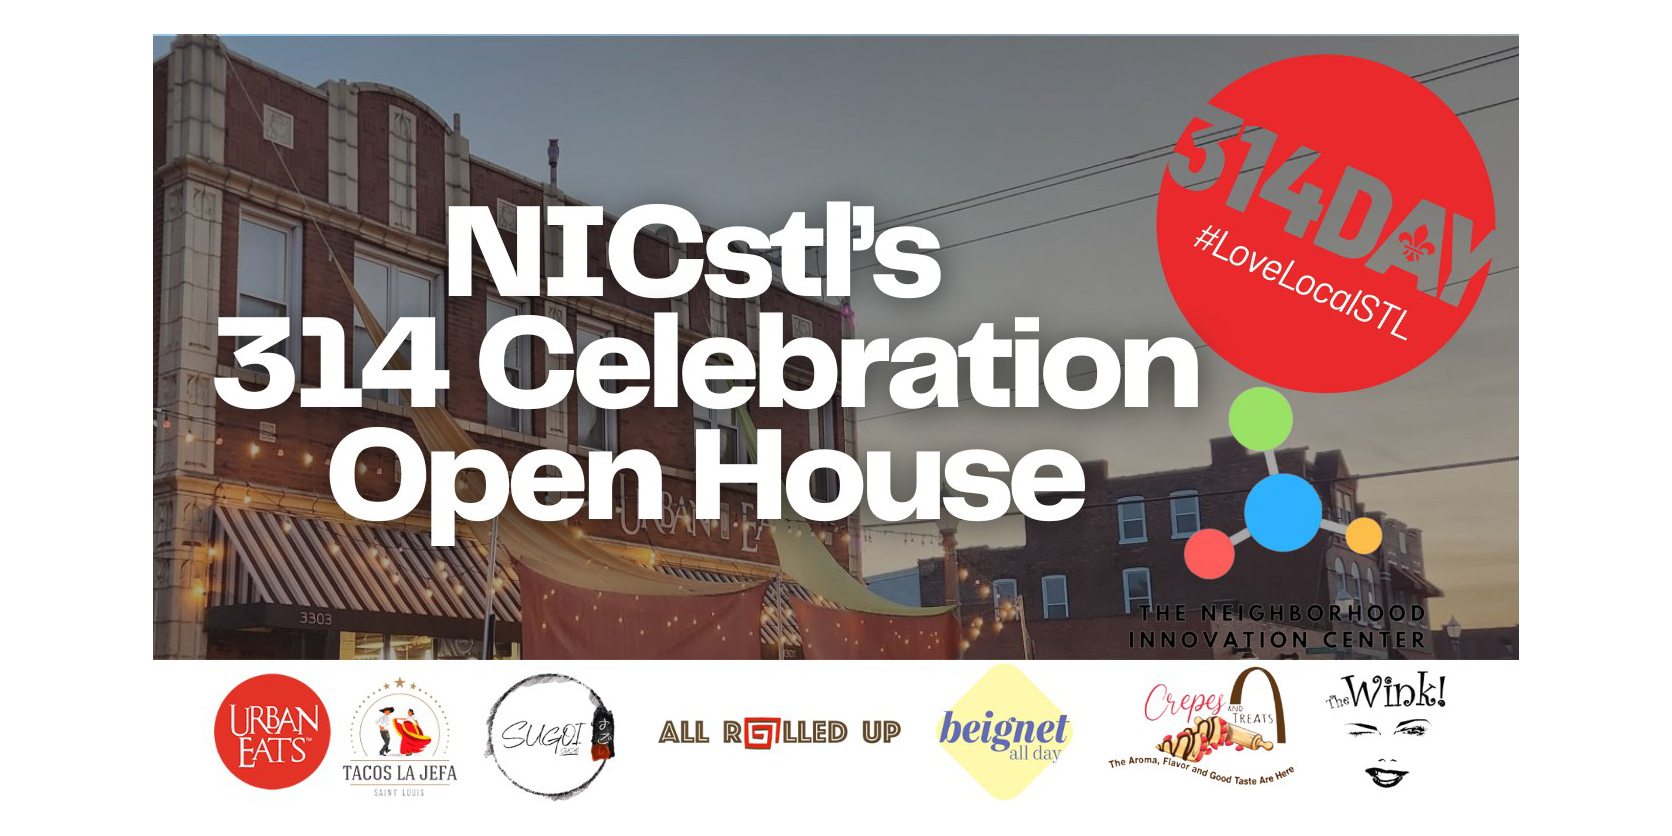 NICstl's 314 Celebration Open House